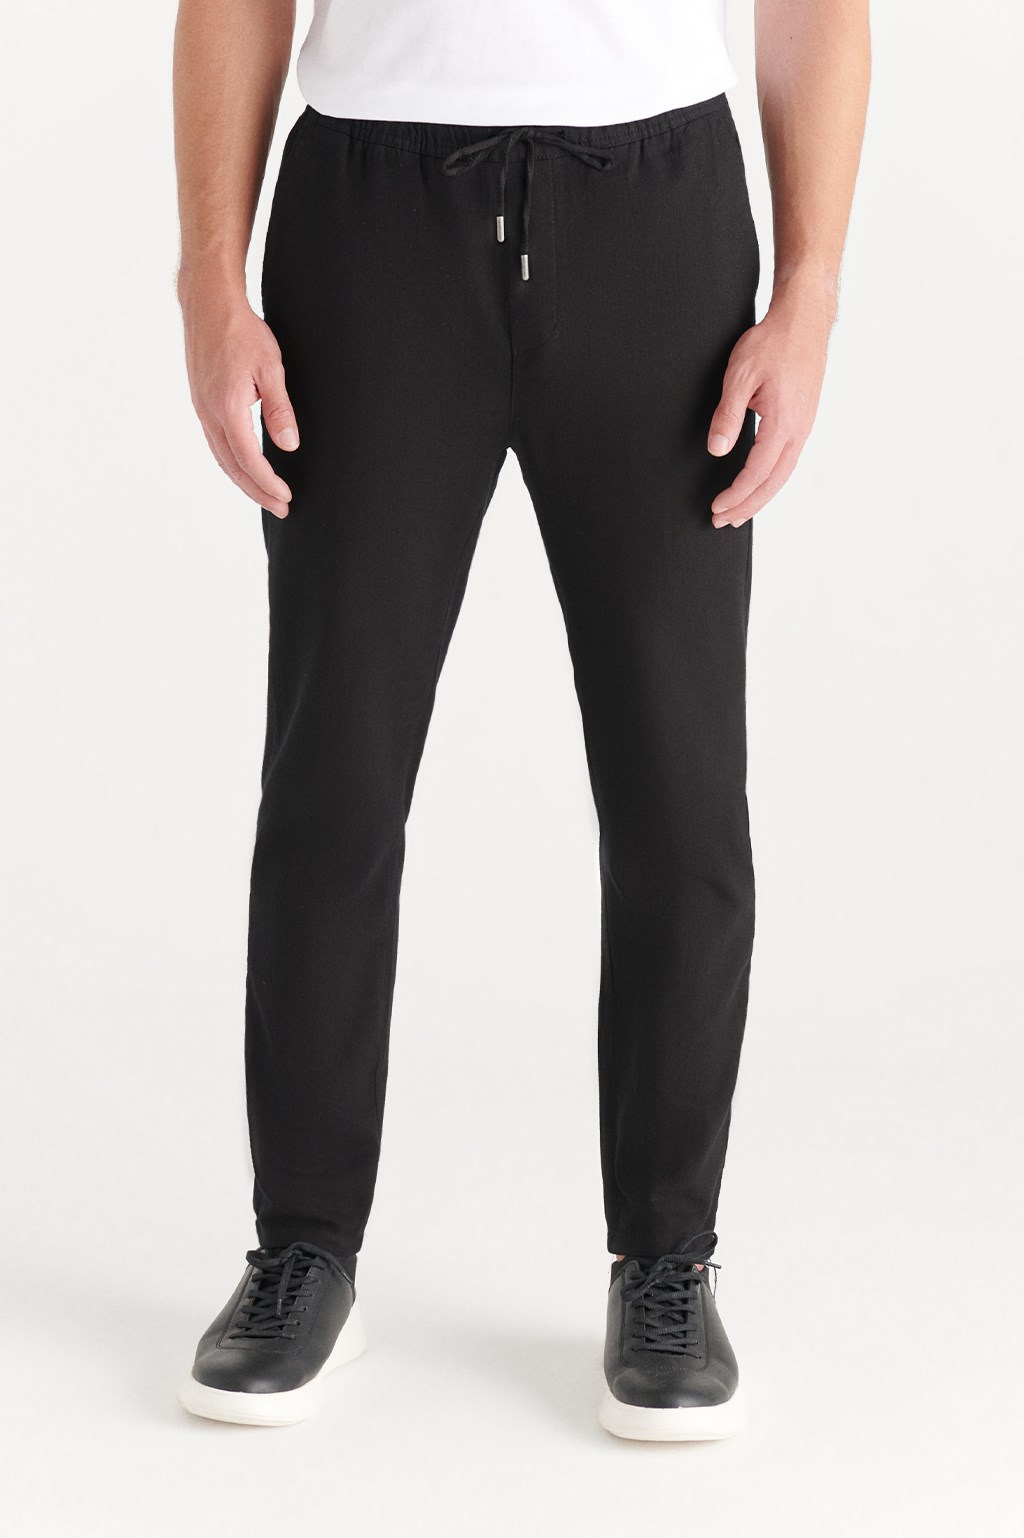 Siyah Yandan Cepli Beli Lastikli Düz Relaxed Fit Pantolon A11Y3052-03 - AVVA